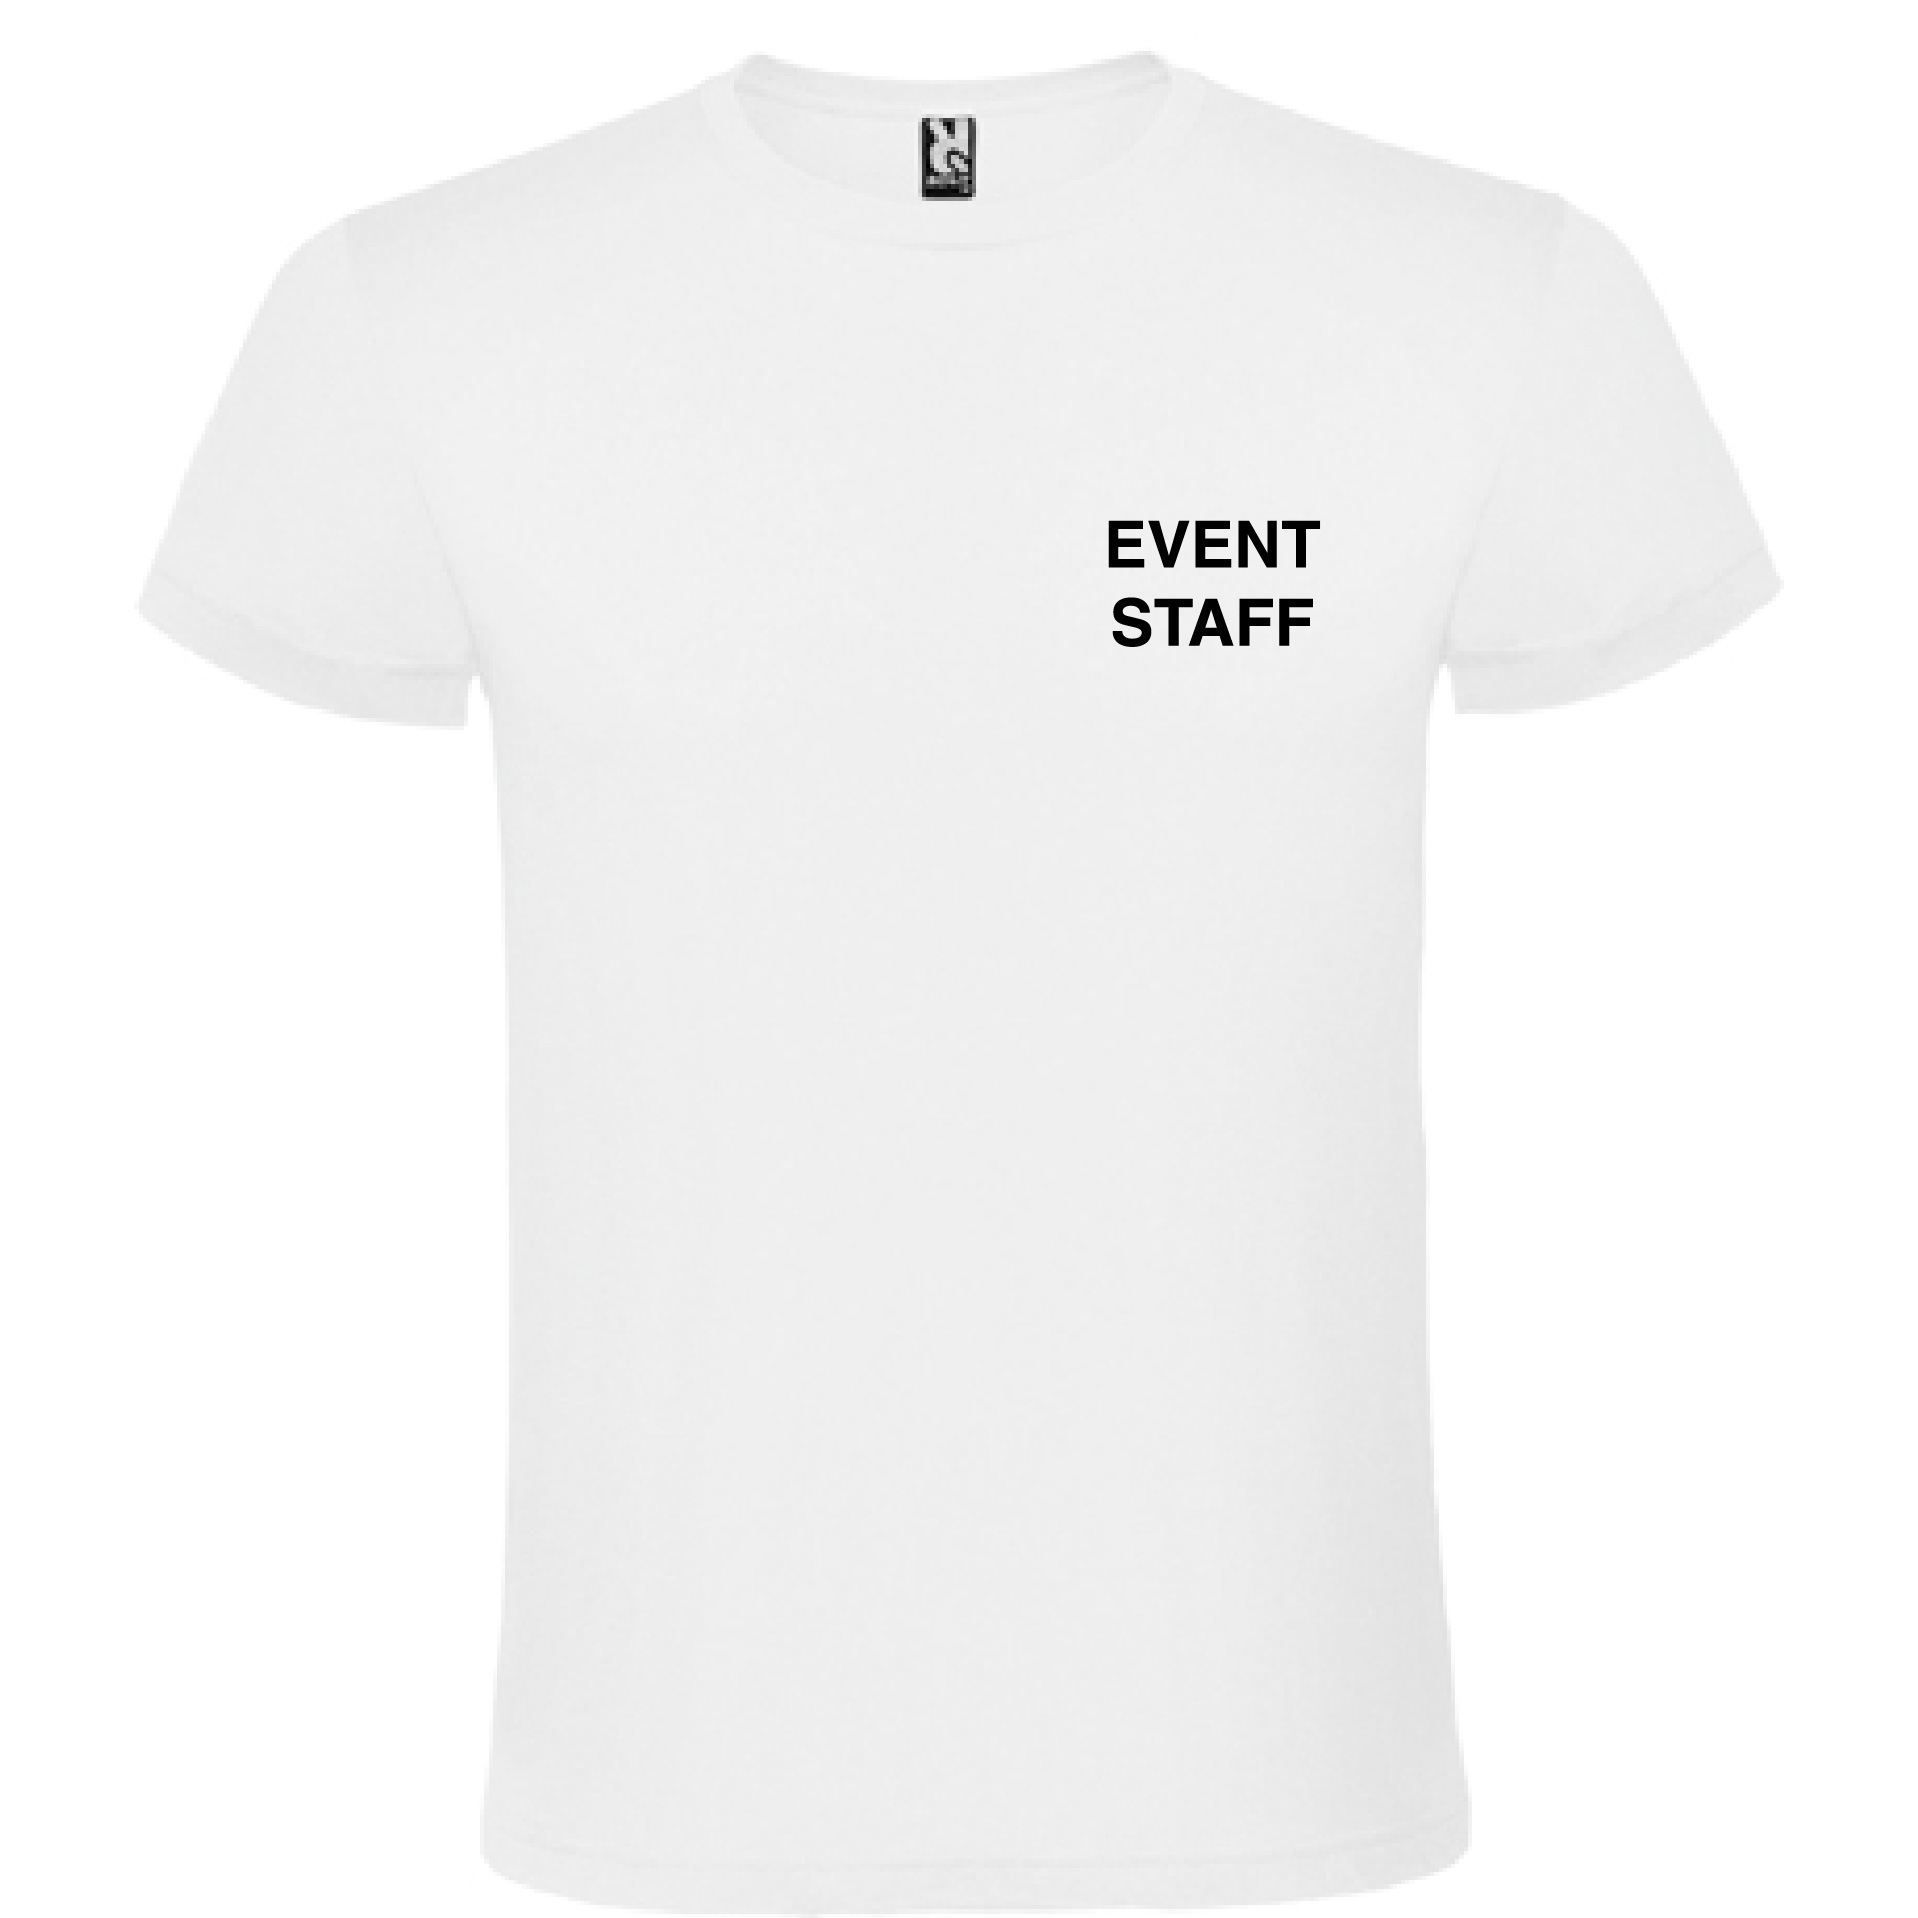 t-shirt_event-staff_front_white.jpg